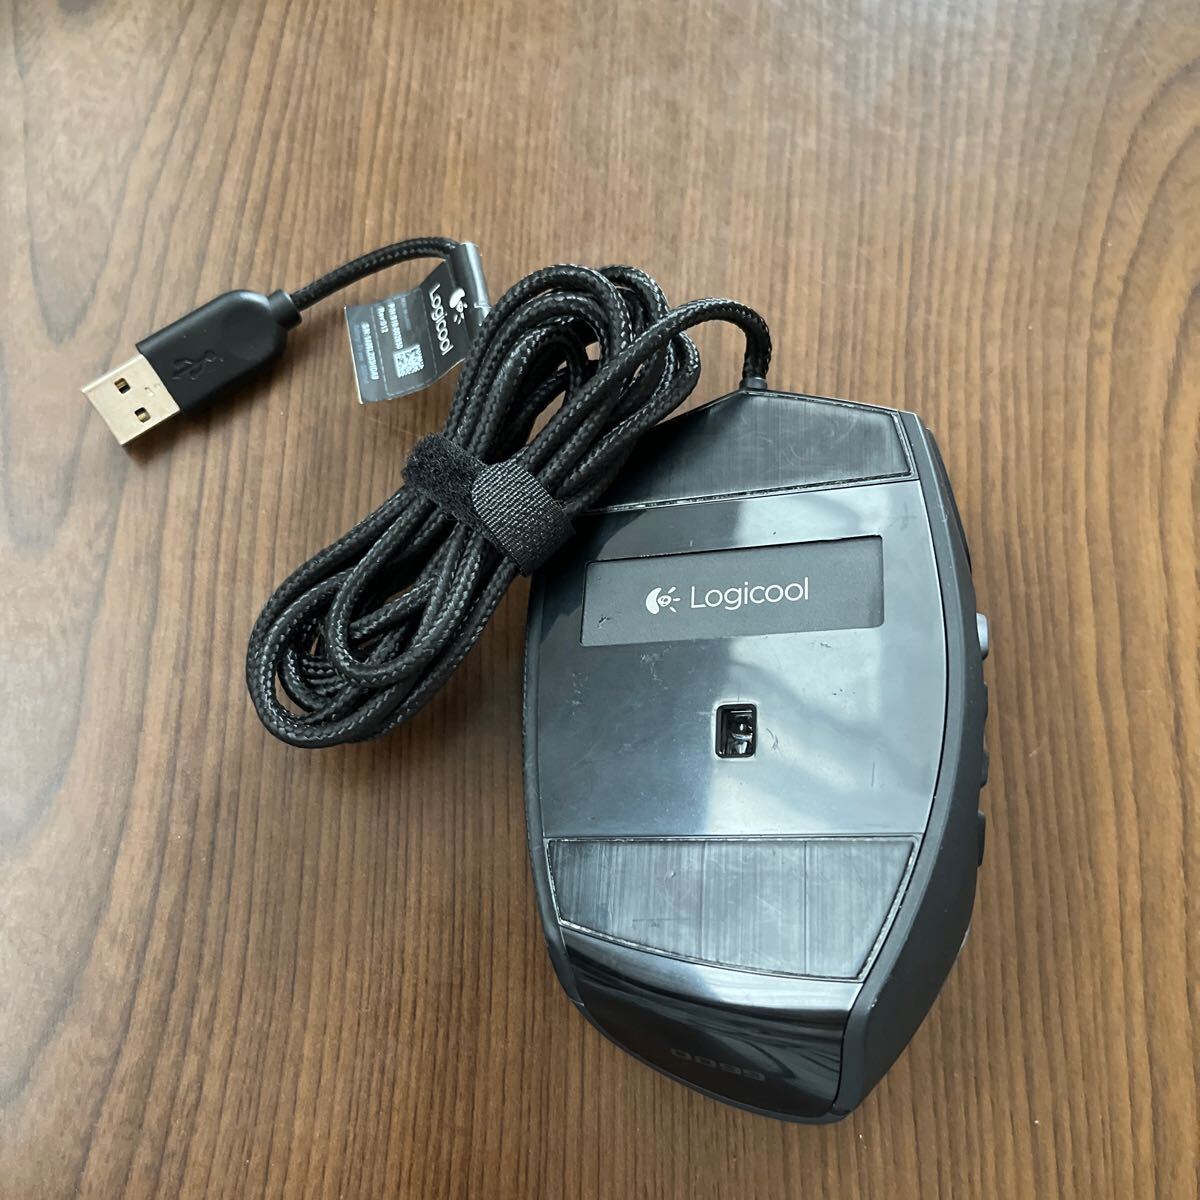 605p1325☆ Logitech G600 MMO Gaming Mouse, Black [並行輸入品]